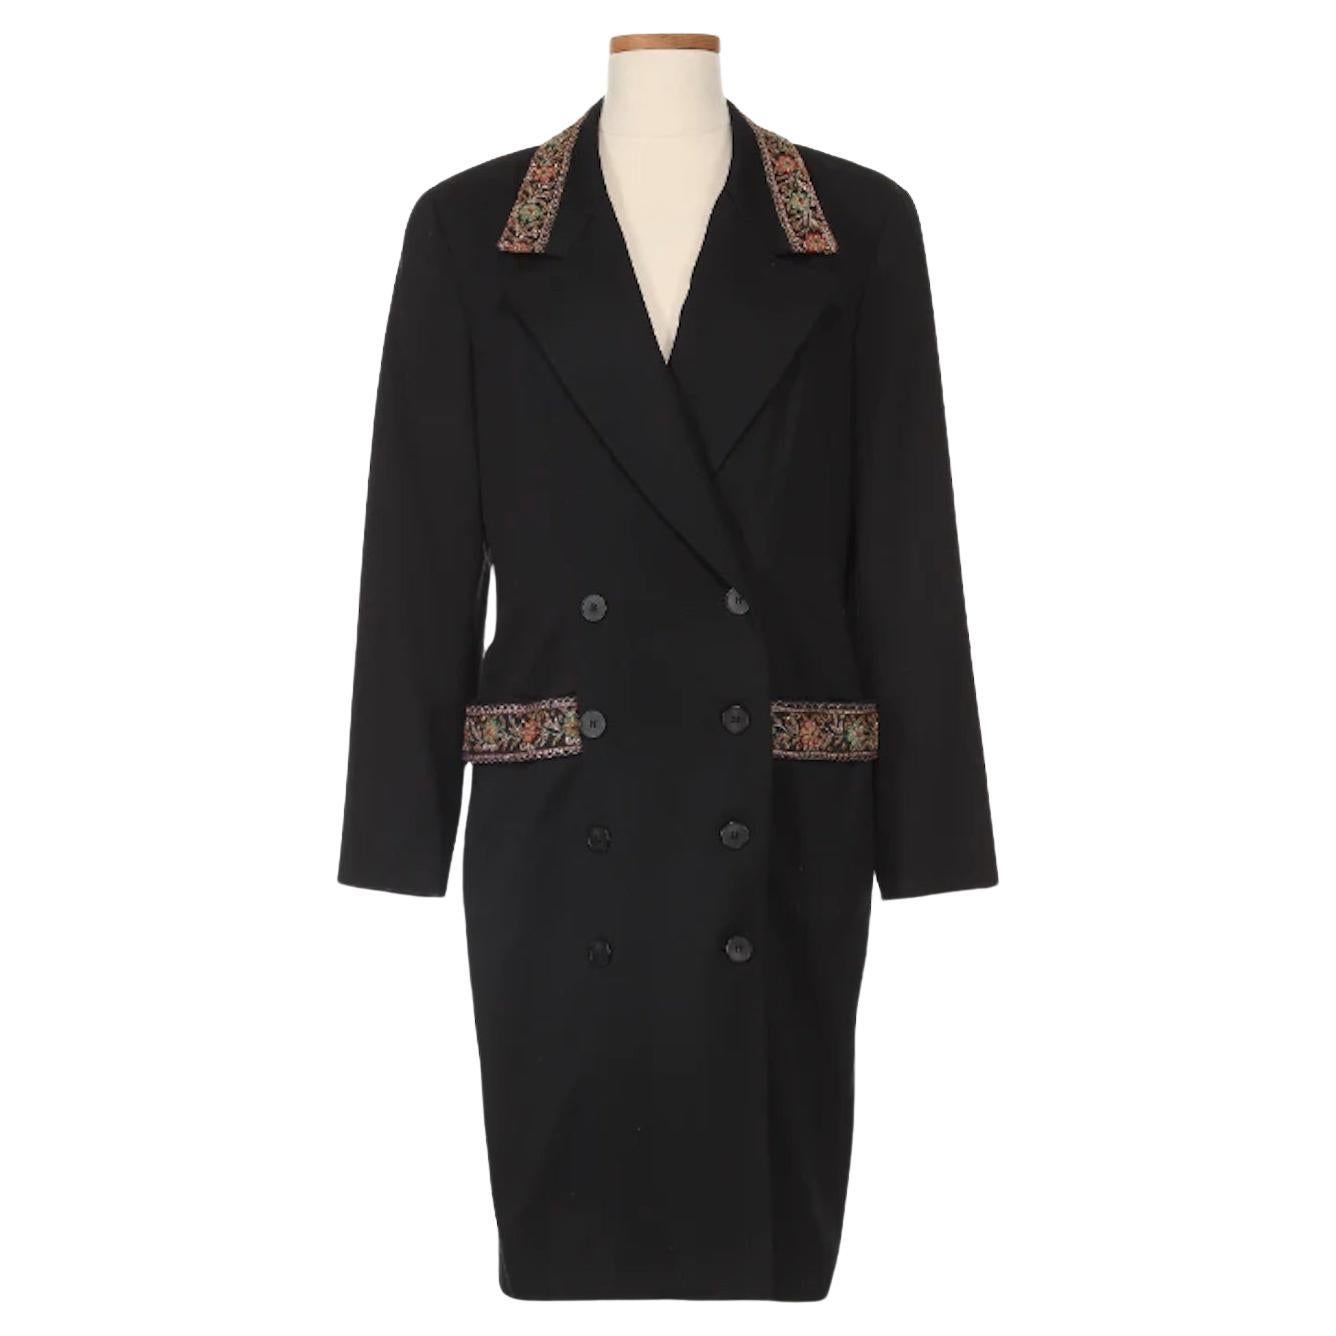 Fendi par Karl Lagerfeld - Robe blazer noire avec ornements en vente